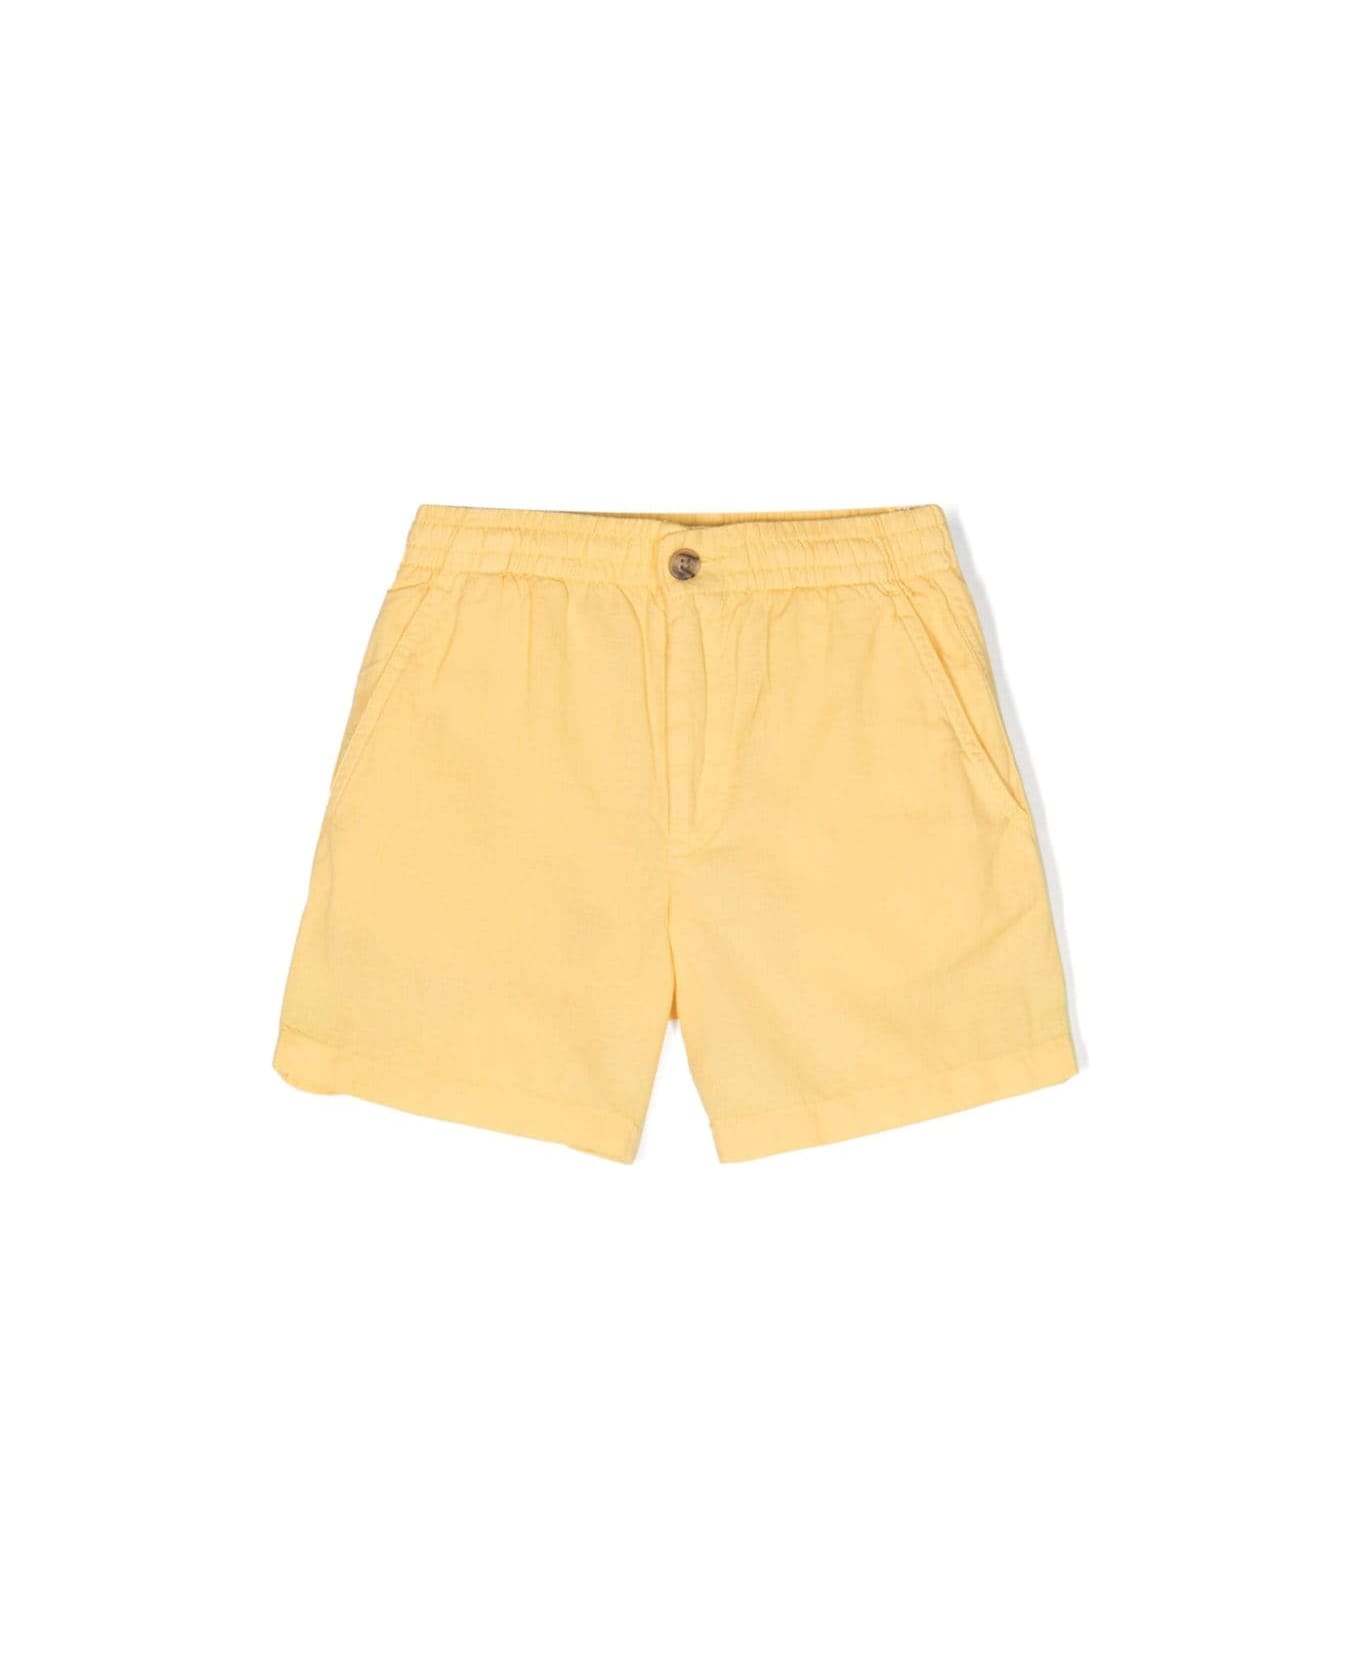 Ralph Lauren Yellow Linen And Cotton Bermuda Shorts - Yellow ボトムス